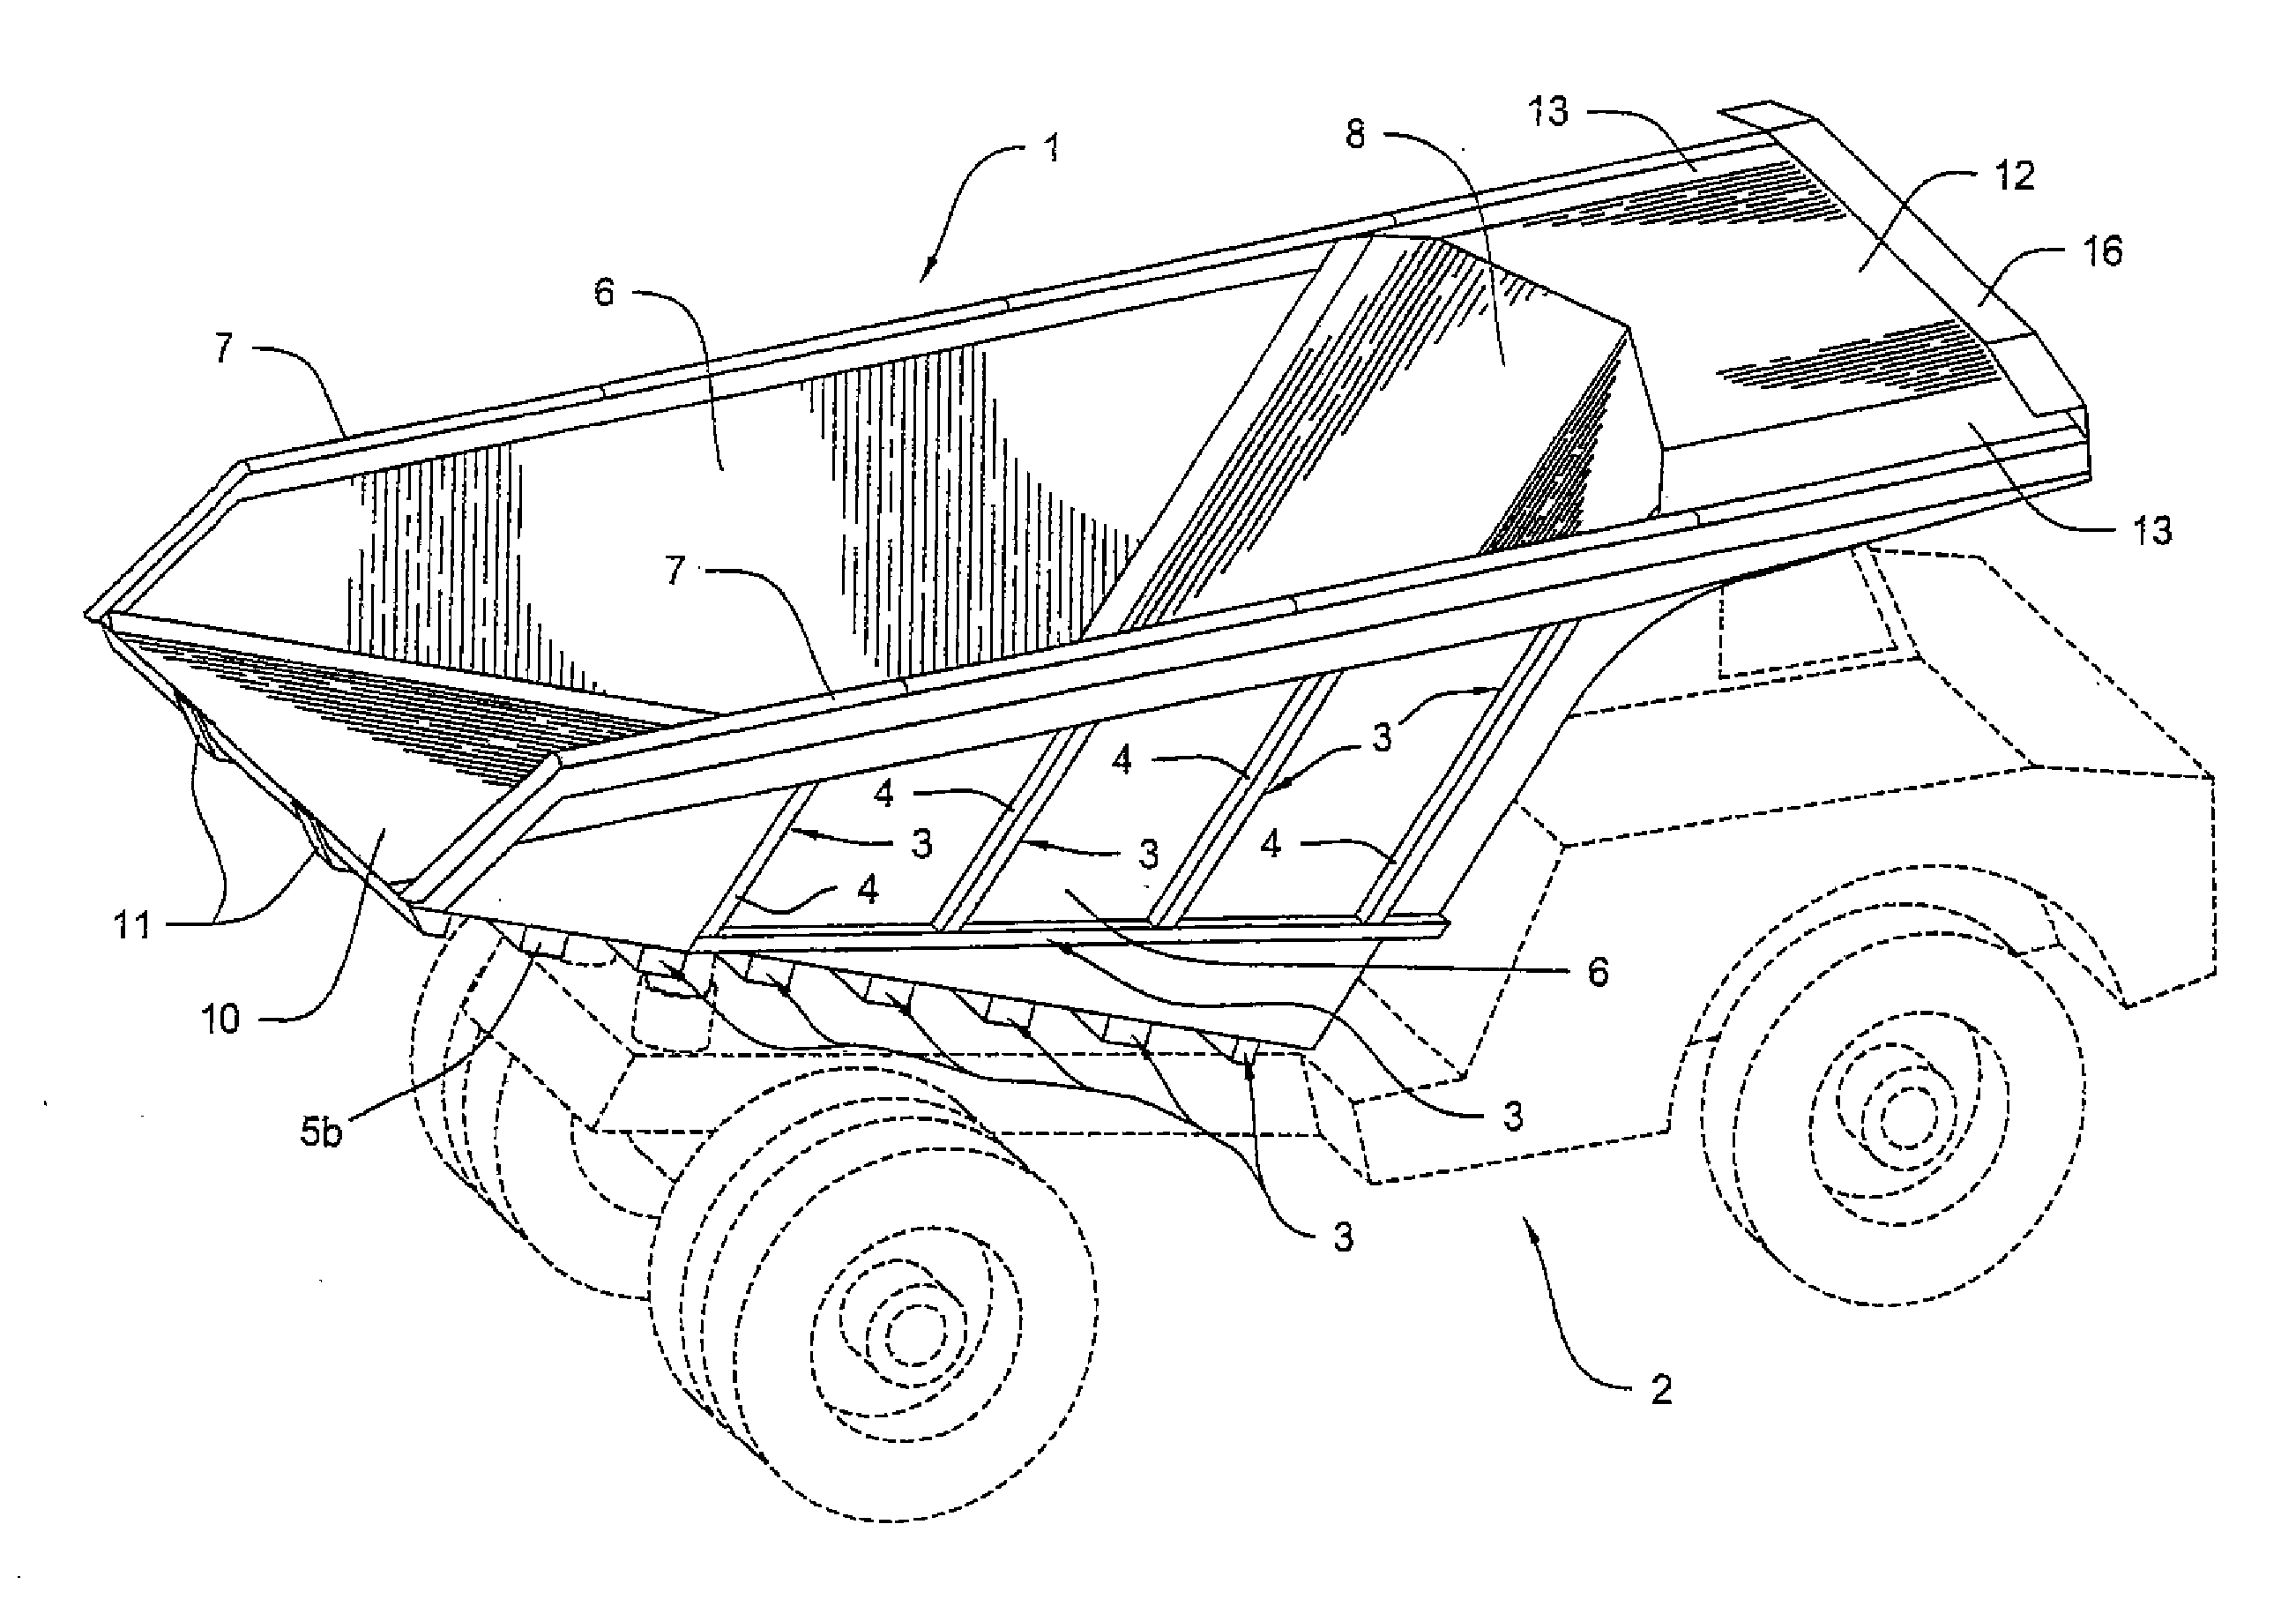 Tube-style truck body